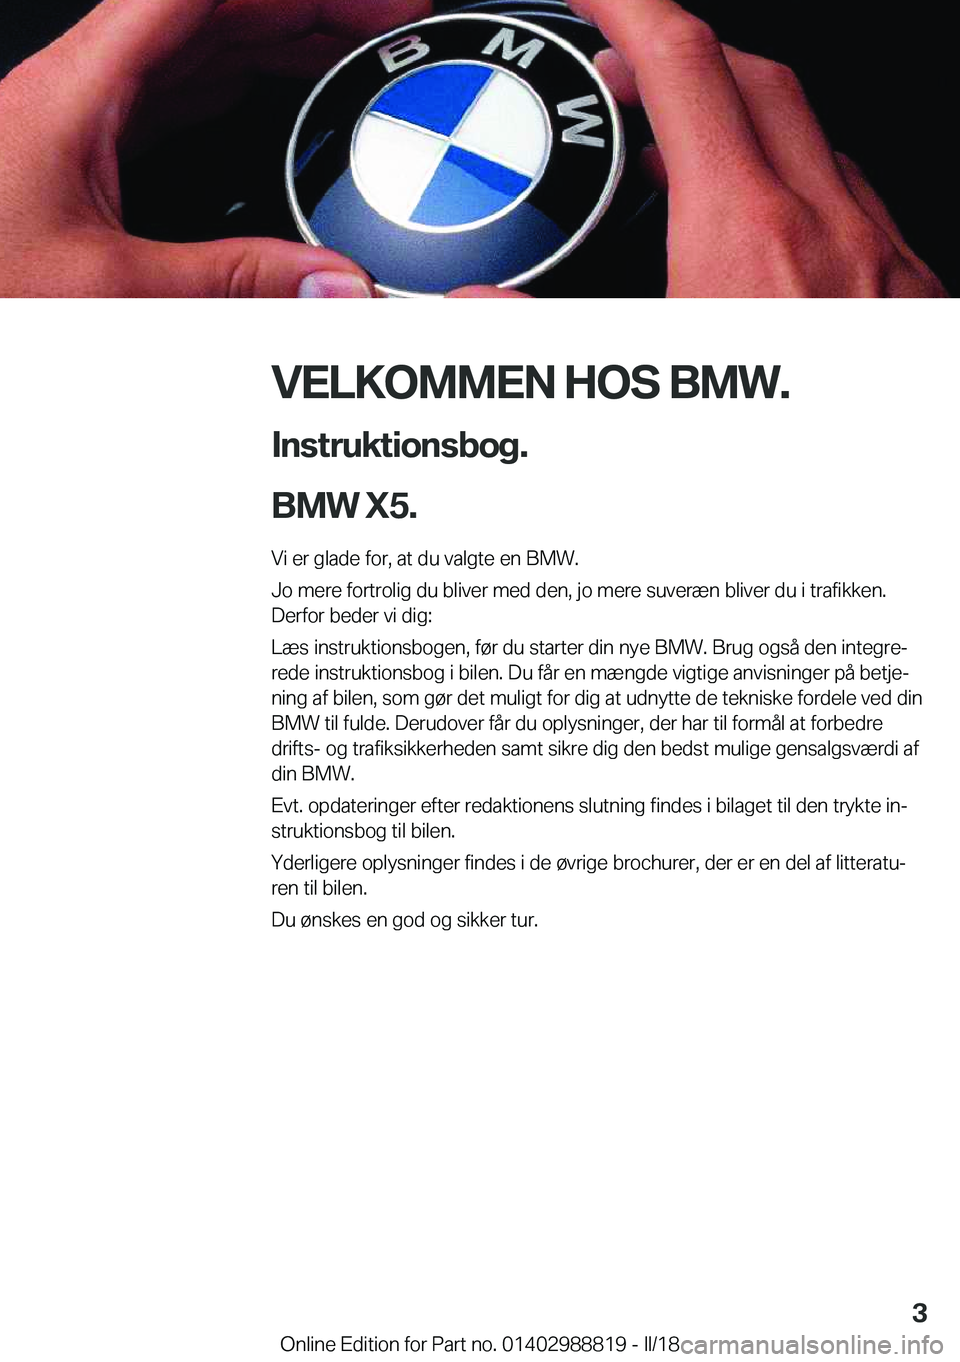 BMW X5 2018  InstruktionsbØger (in Danish) �V�E�L�K�O�M�M�E�N��H�O�S��B�M�W�.
�I�n�s�t�r�u�k�t�i�o�n�s�b�o�g�.
�B�M�W��X�5�. �V�i� �e�r� �g�l�a�d�e� �f�o�r�,� �a�t� �d�u� �v�a�l�g�t�e� �e�n� �B�M�W�.
�J�o� �m�e�r�e� �f�o�r�t�r�o�l�i�g� �d�u